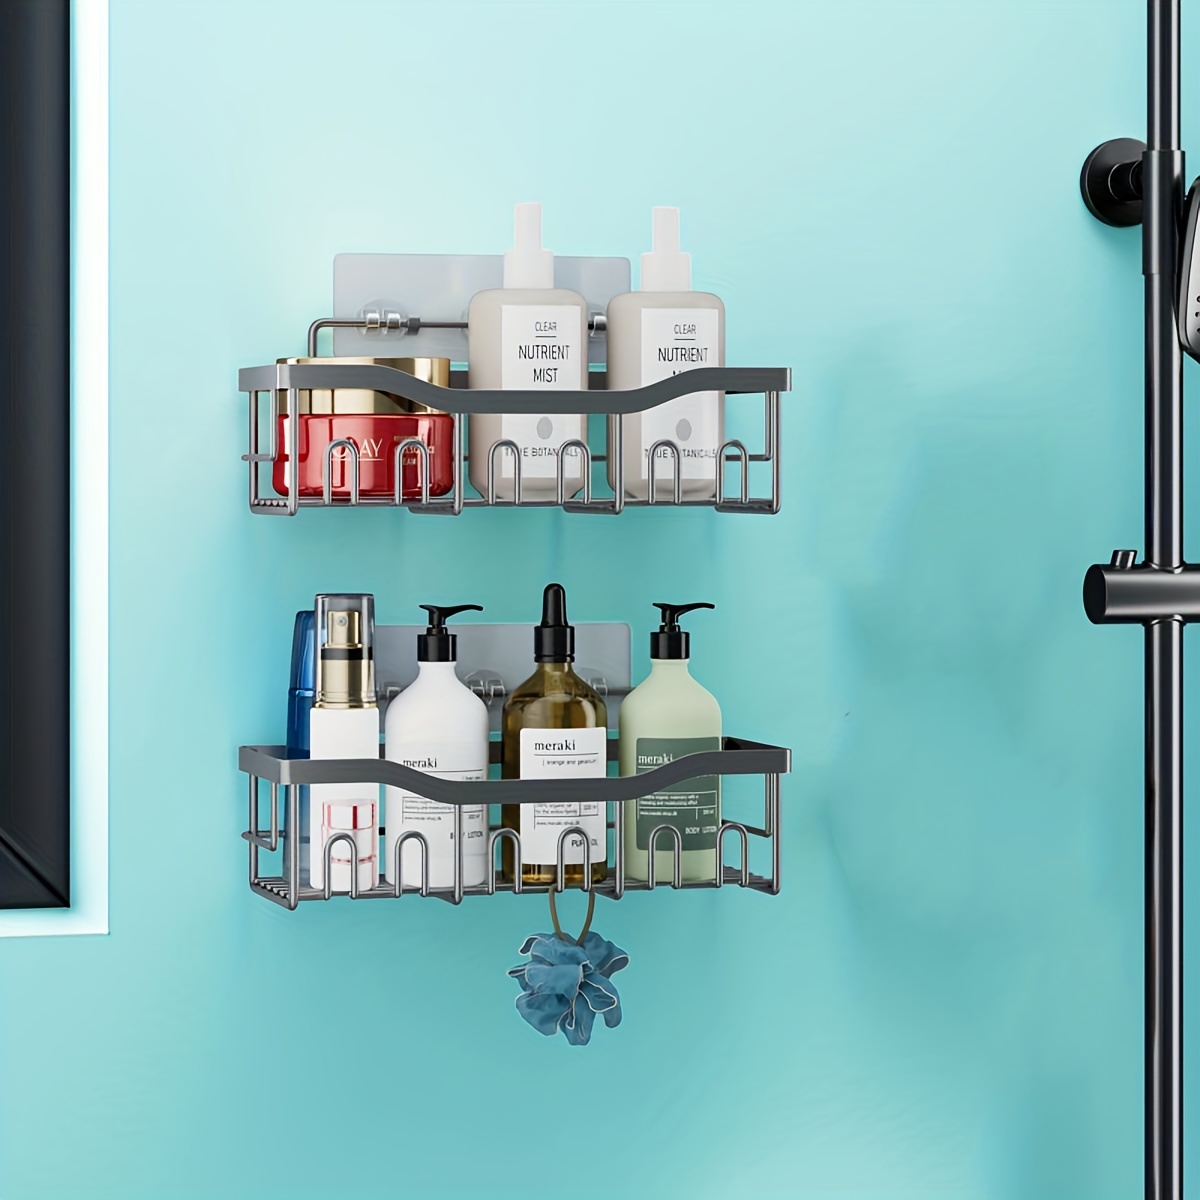 Clear Shower Shelves, Adhesive Bathroom Shower Caddy Organizer